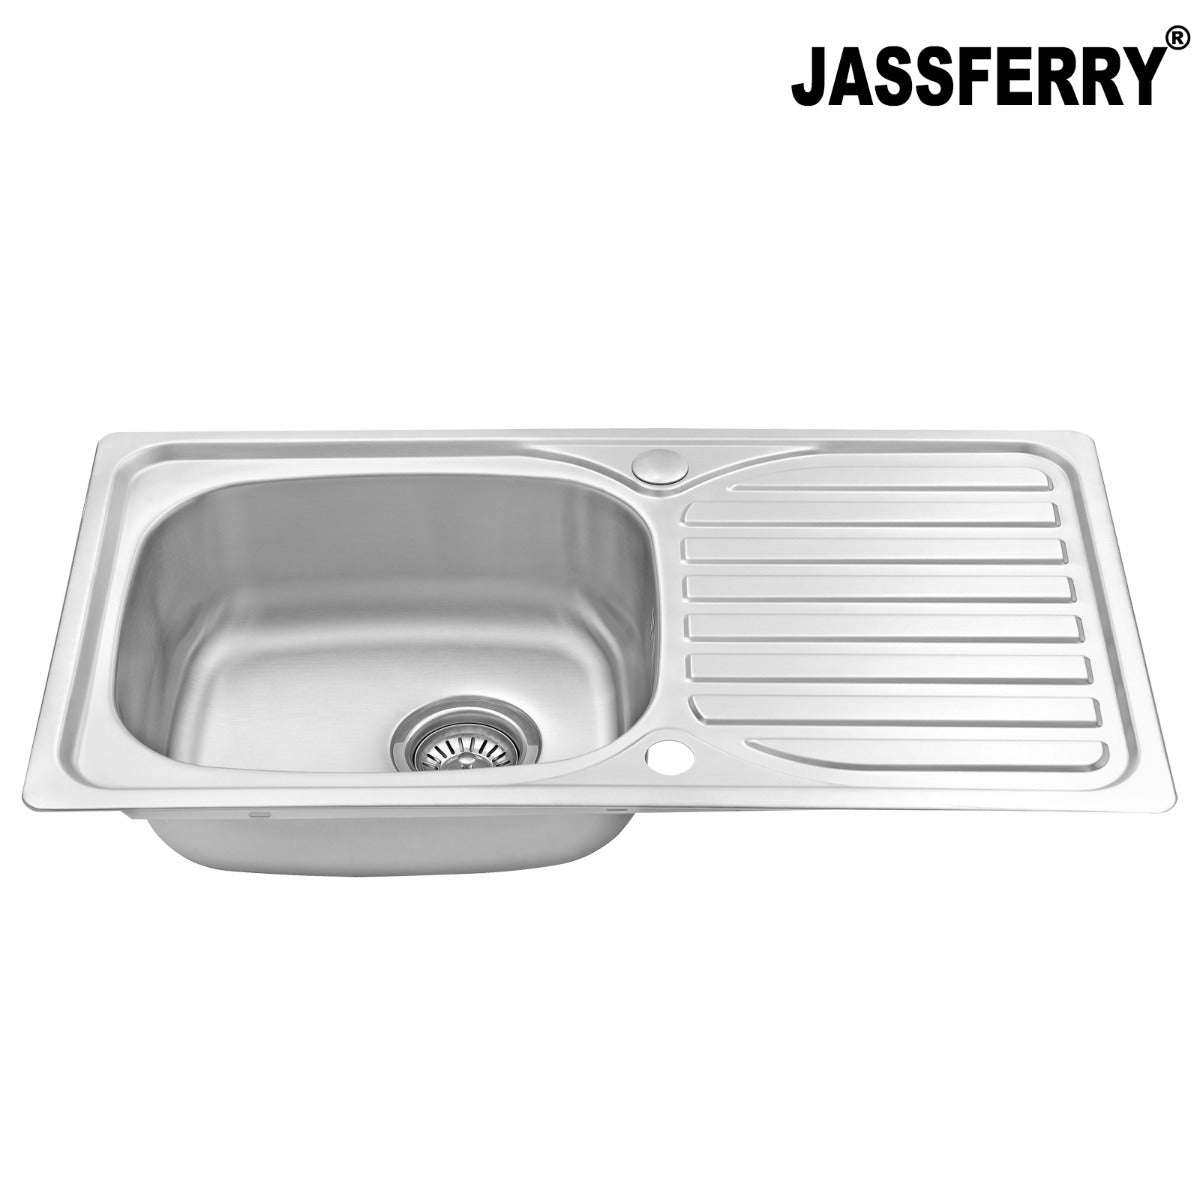 JassferryJASSFERRY Stainless Steel Kitchen Sink Inset Single 1 Bowl Reversible DrainerKitchen Sinks